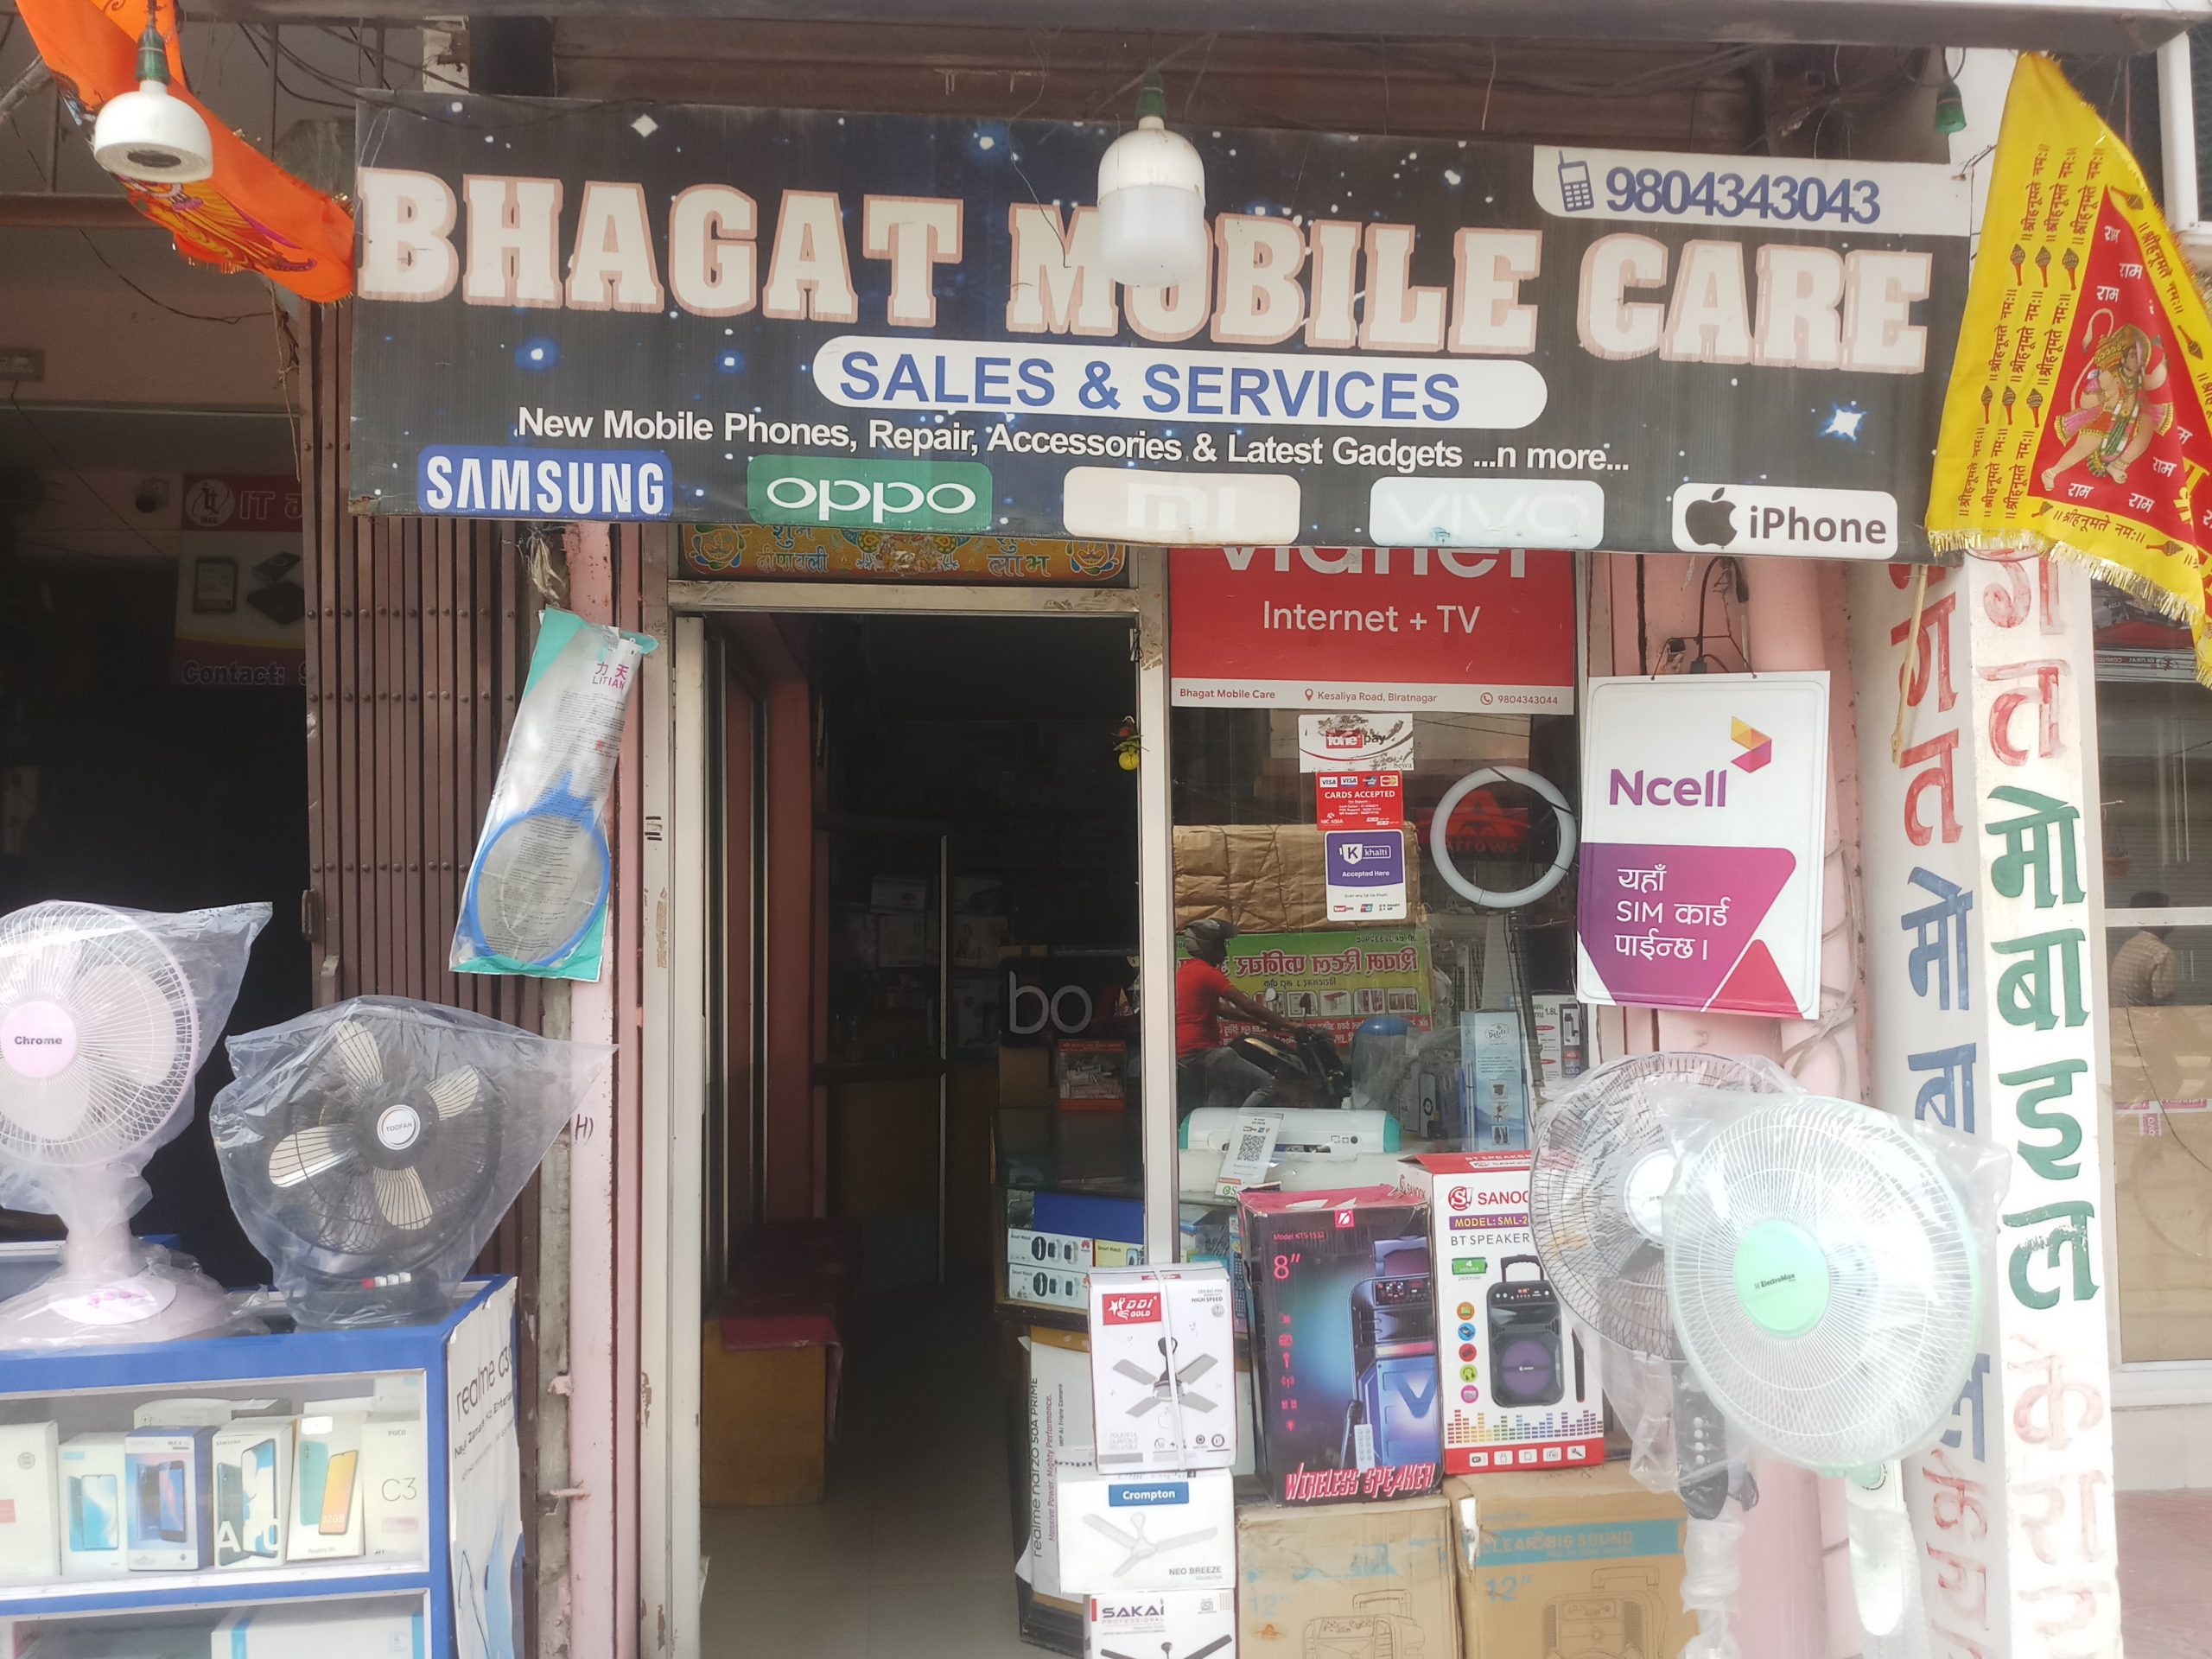 Bhagat mobile care